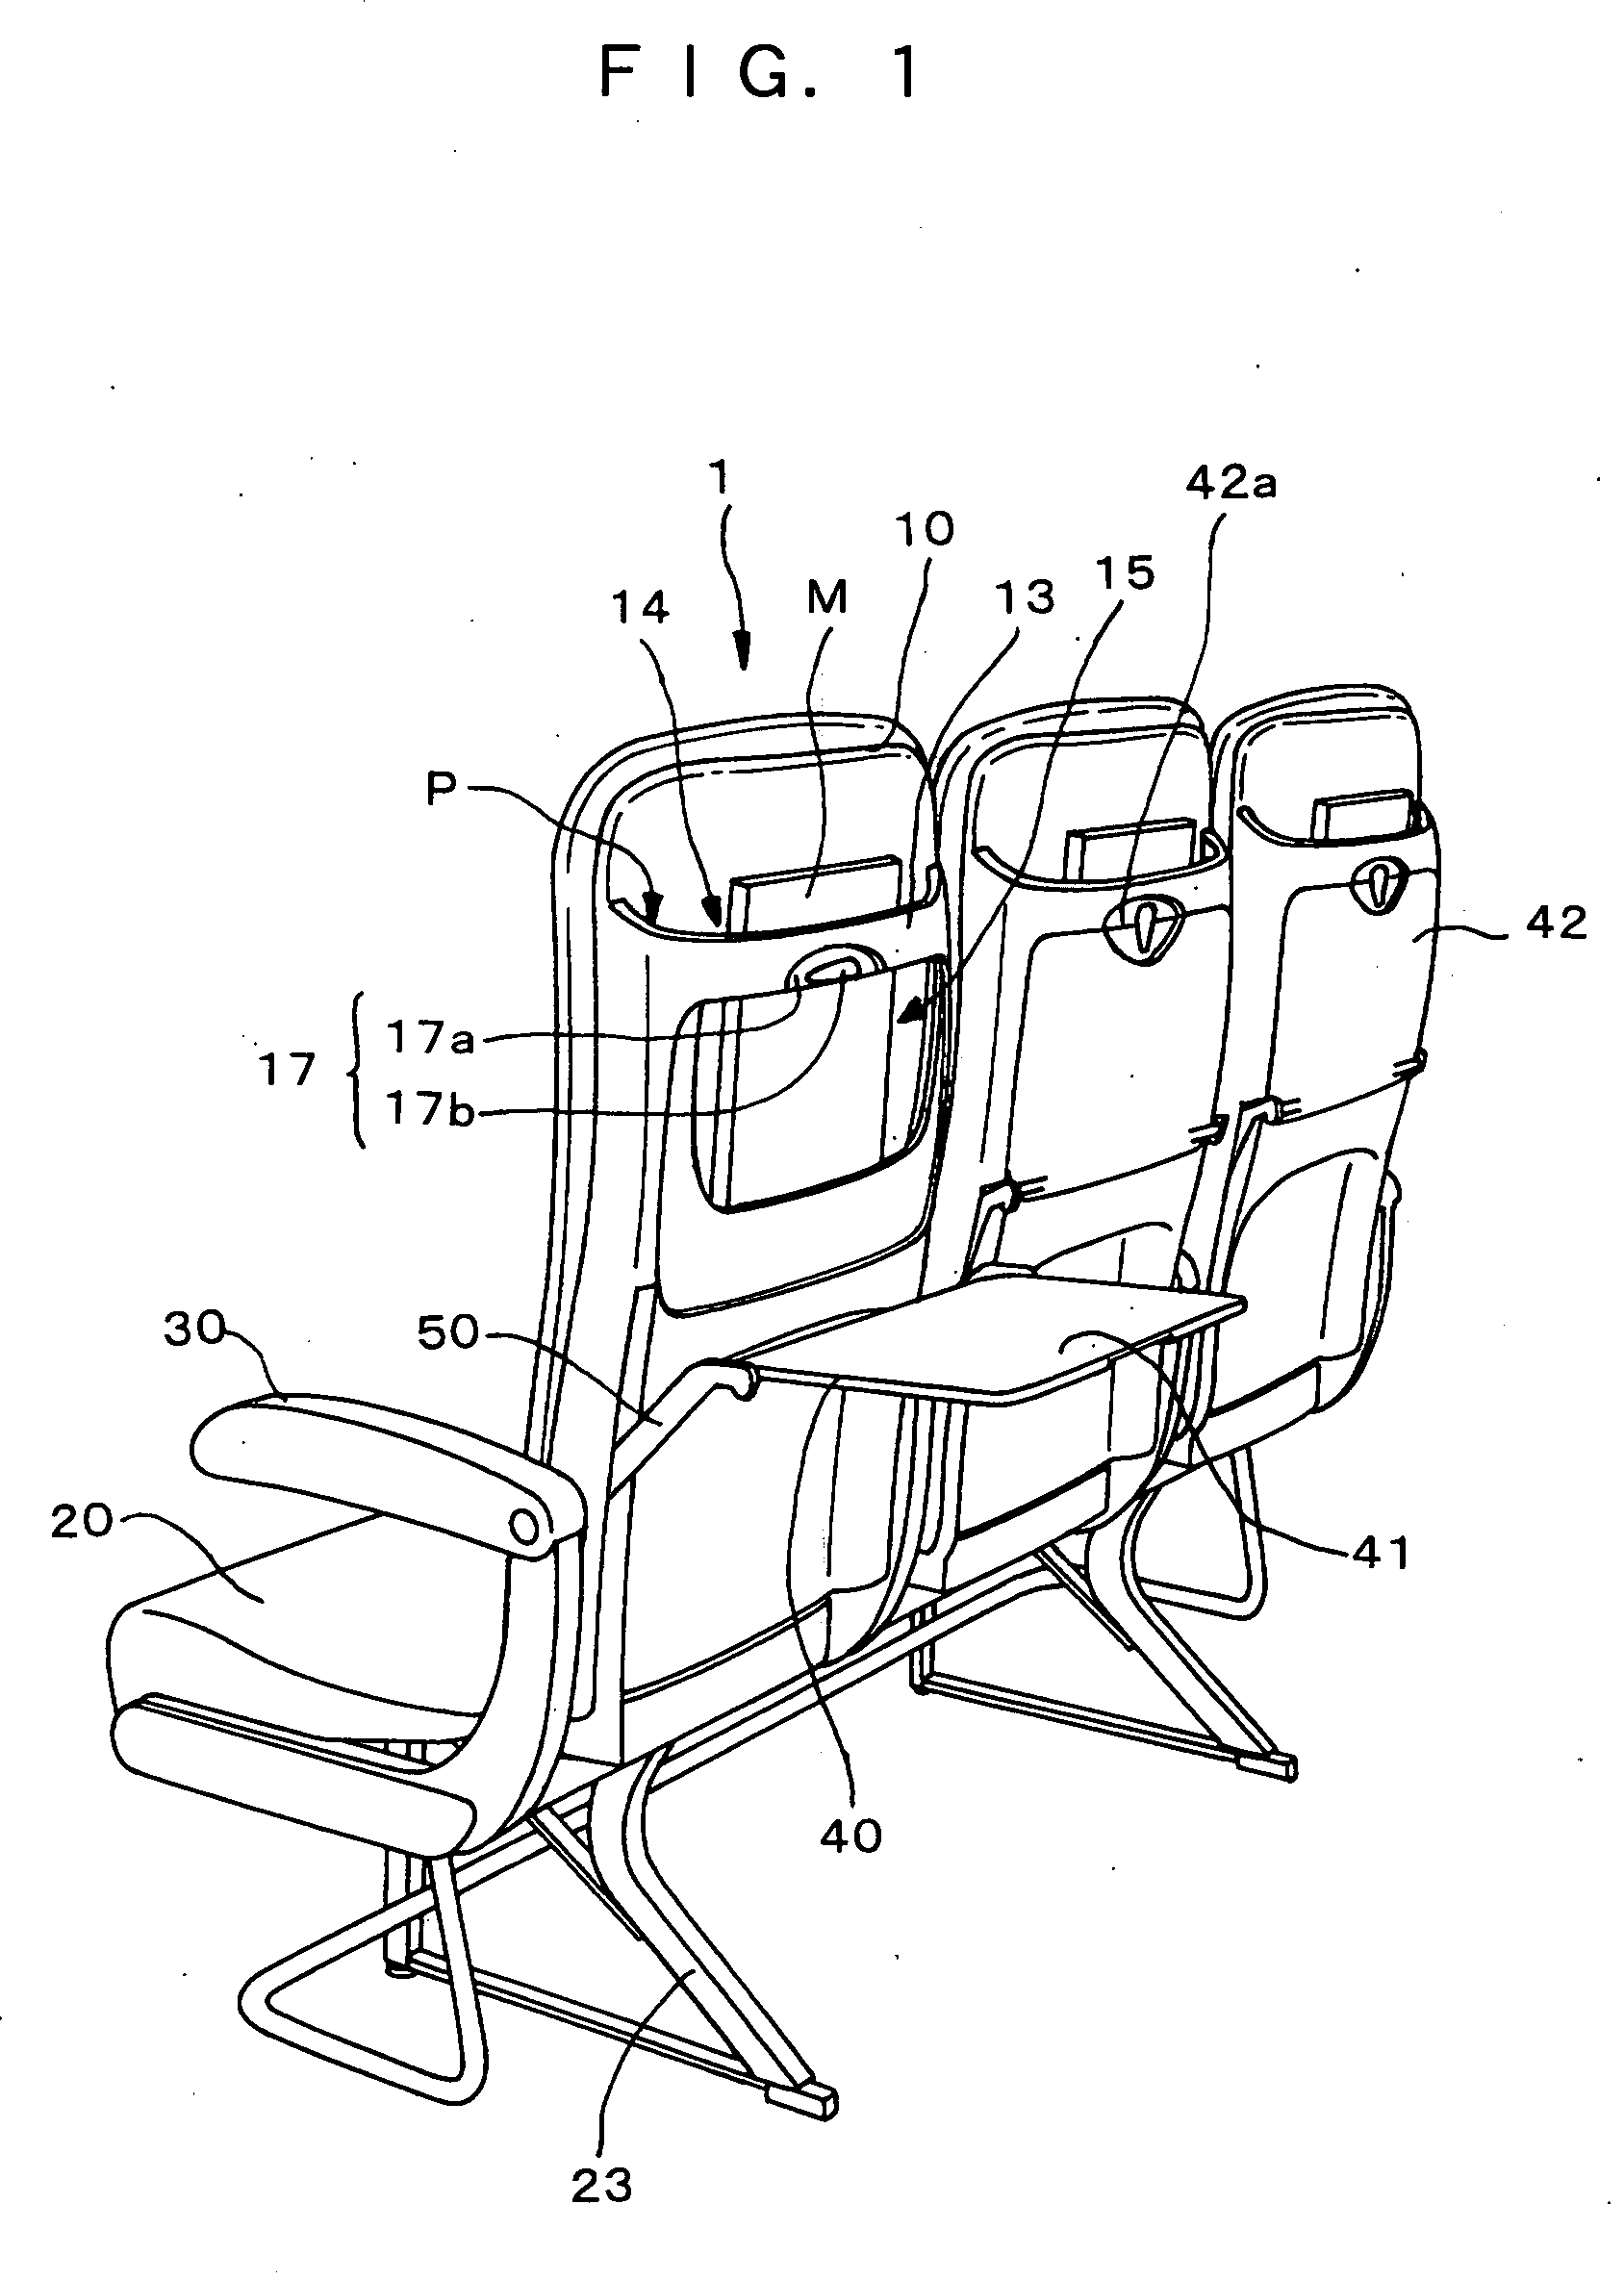 Aircraft Seat